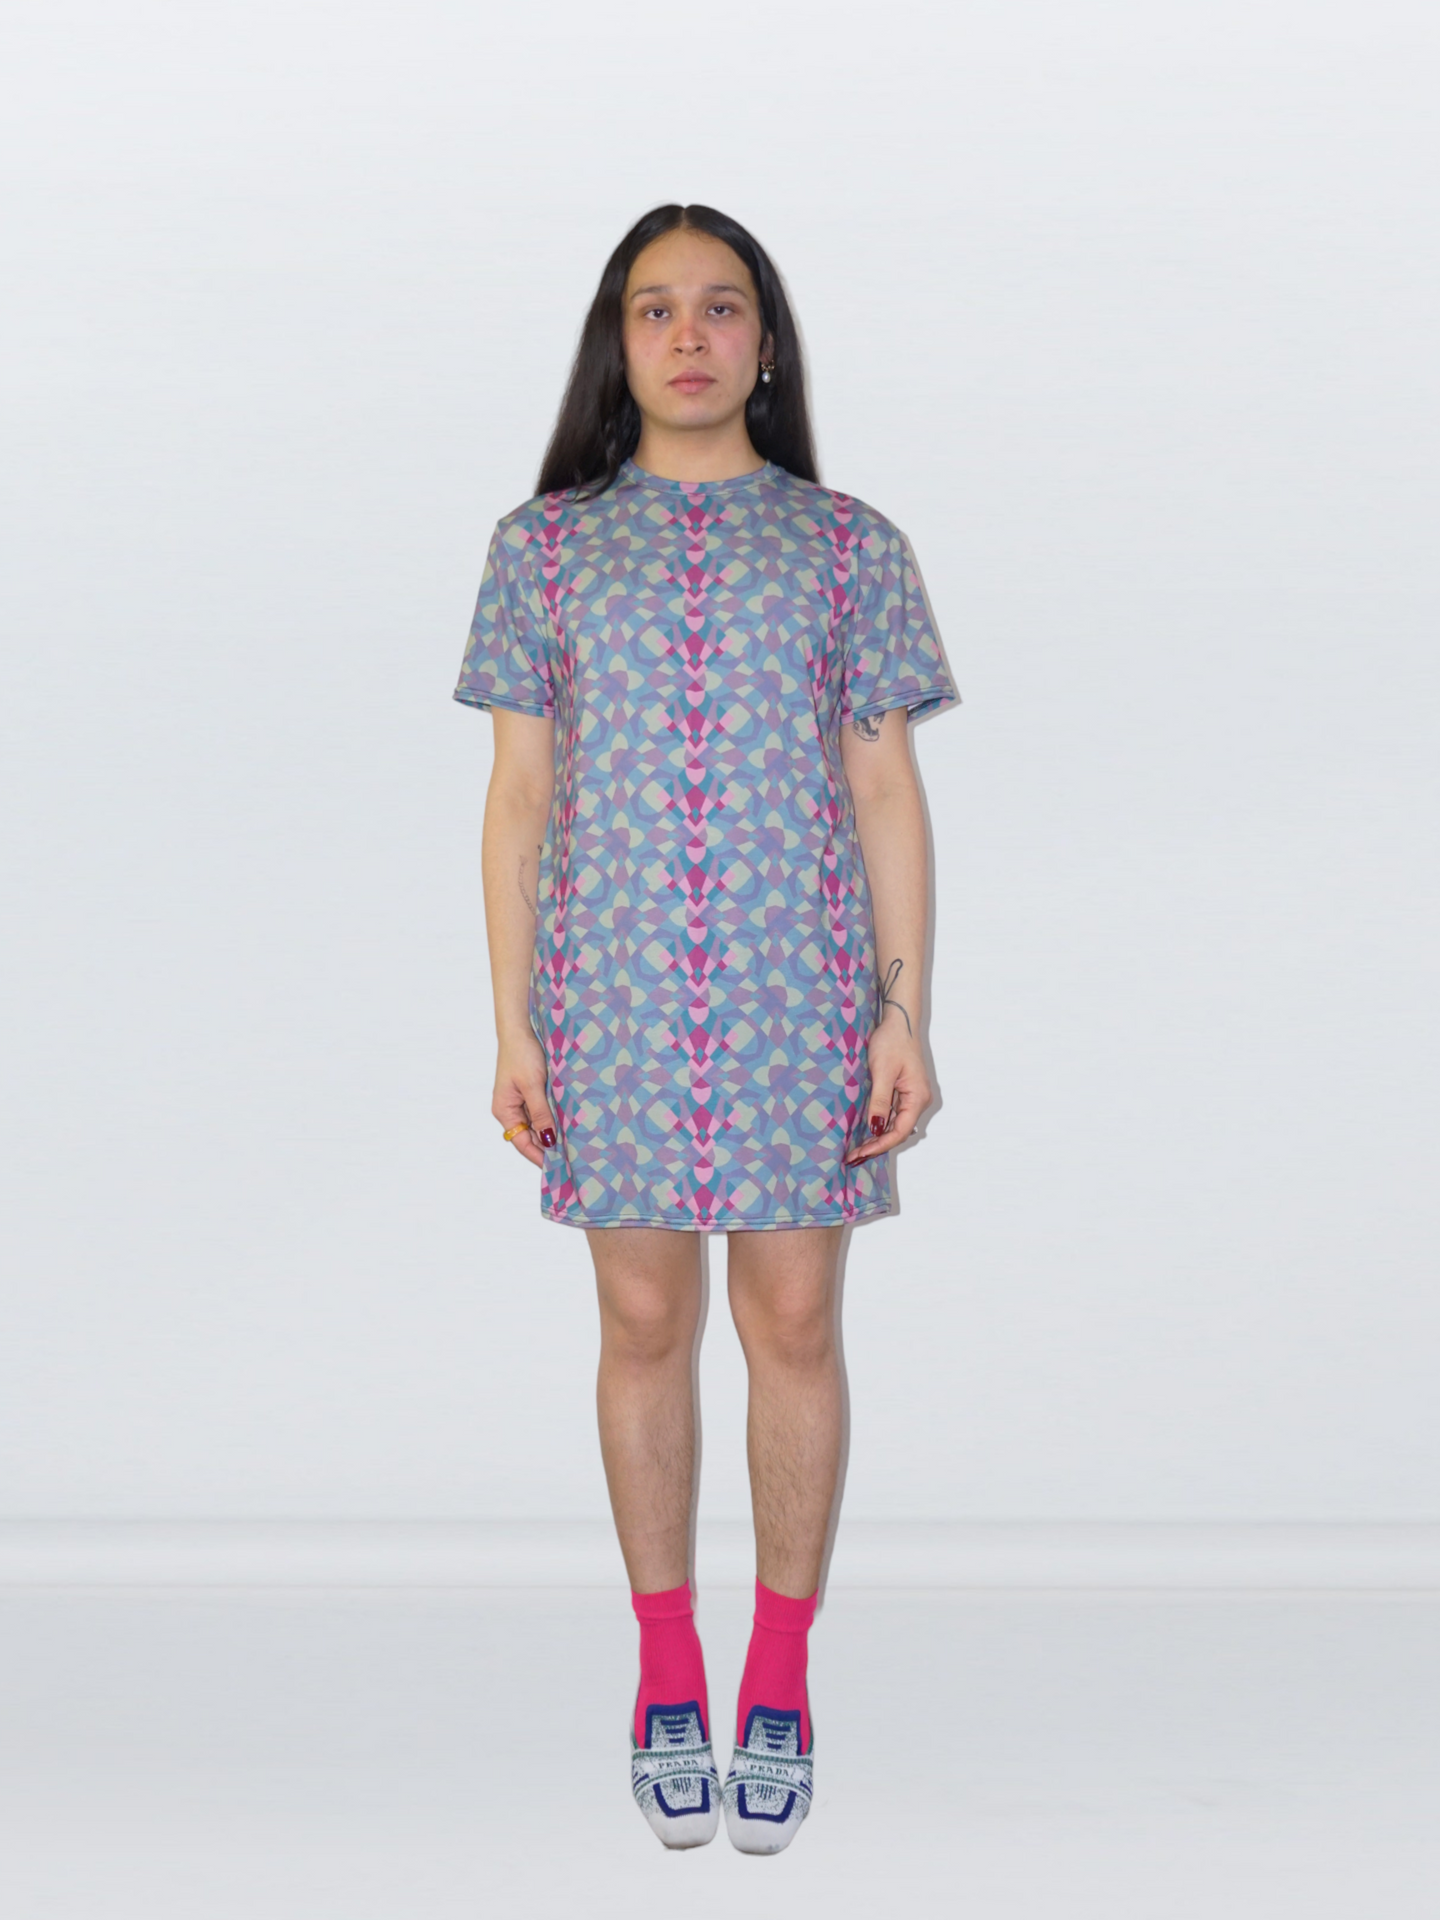 tangram t-shirt dress